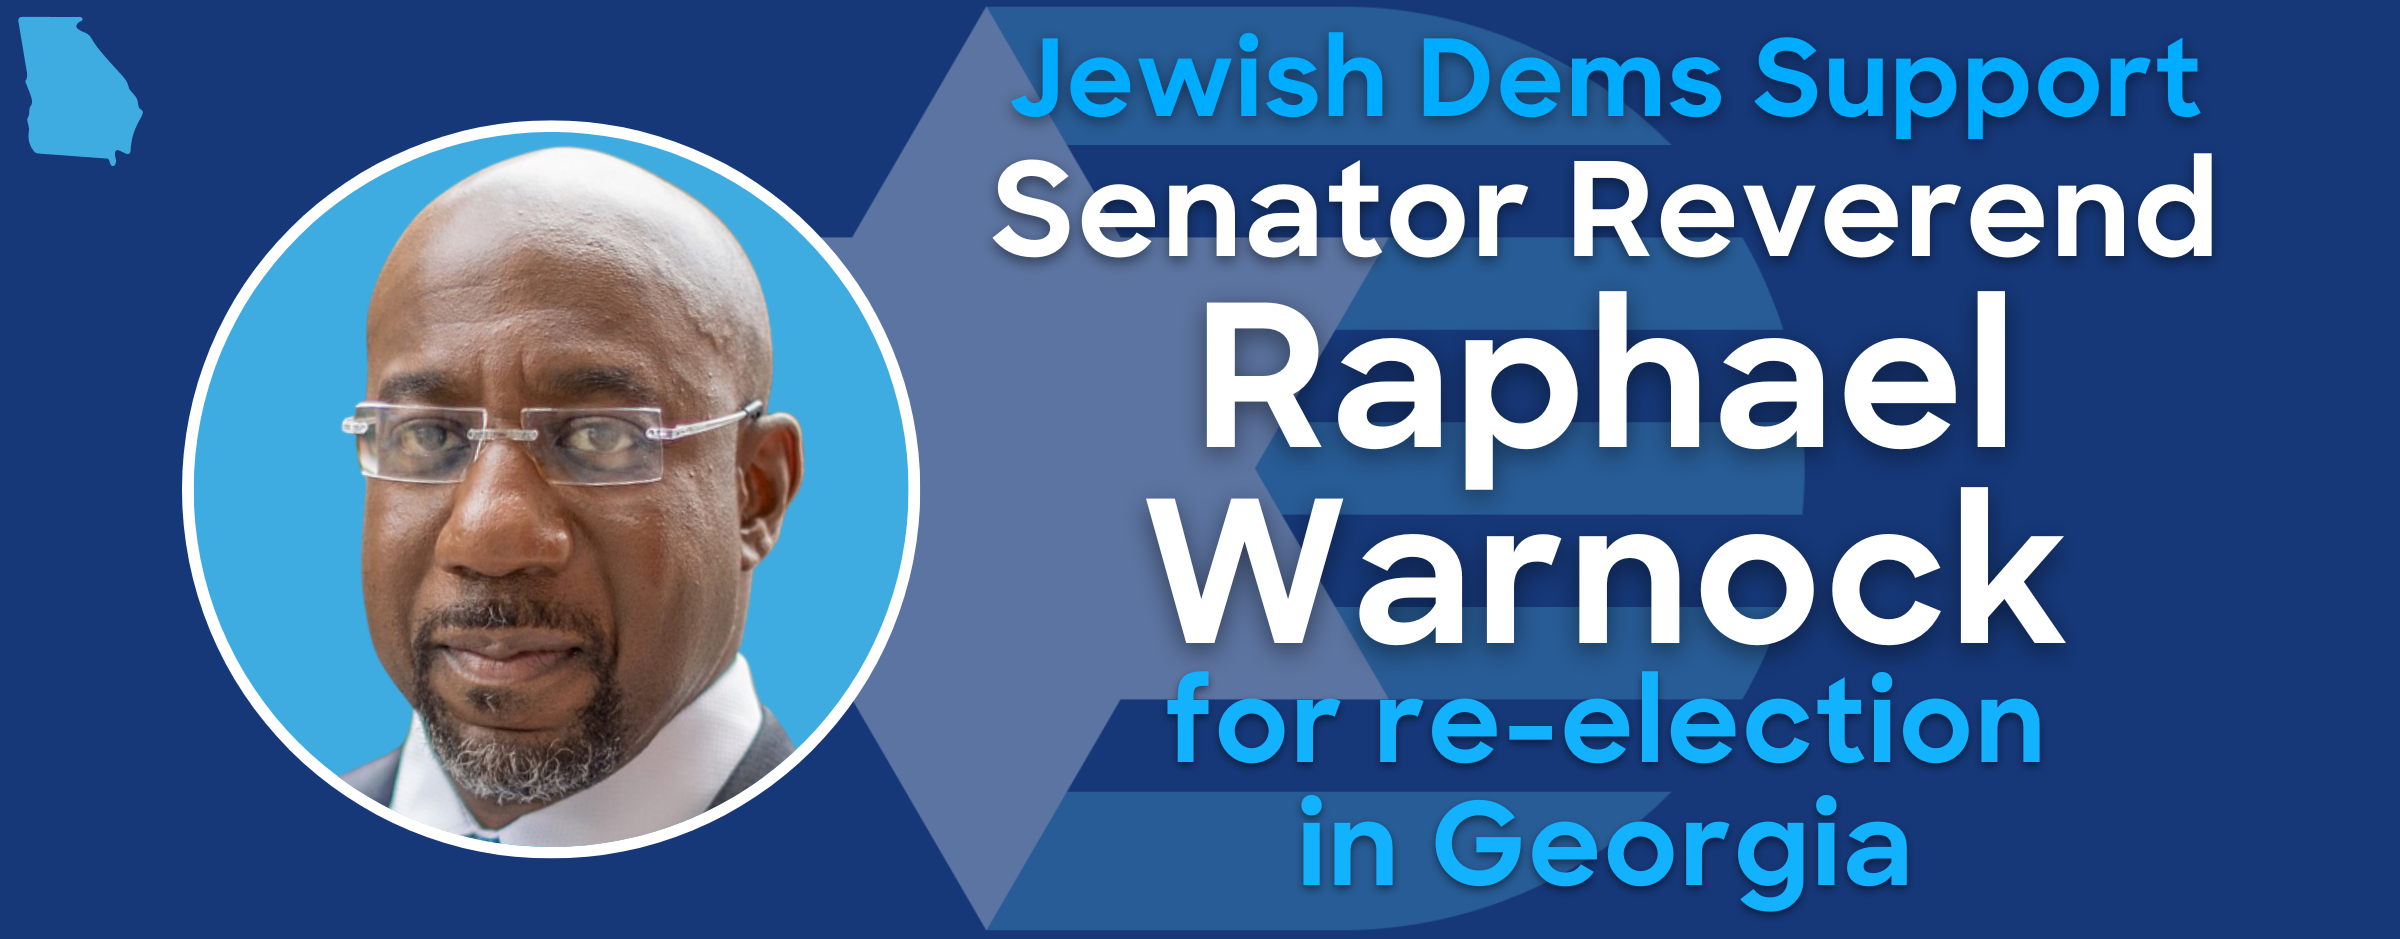 Jewish Dems Support Senator Reverend Raphael Warnock for re-election in Georgia